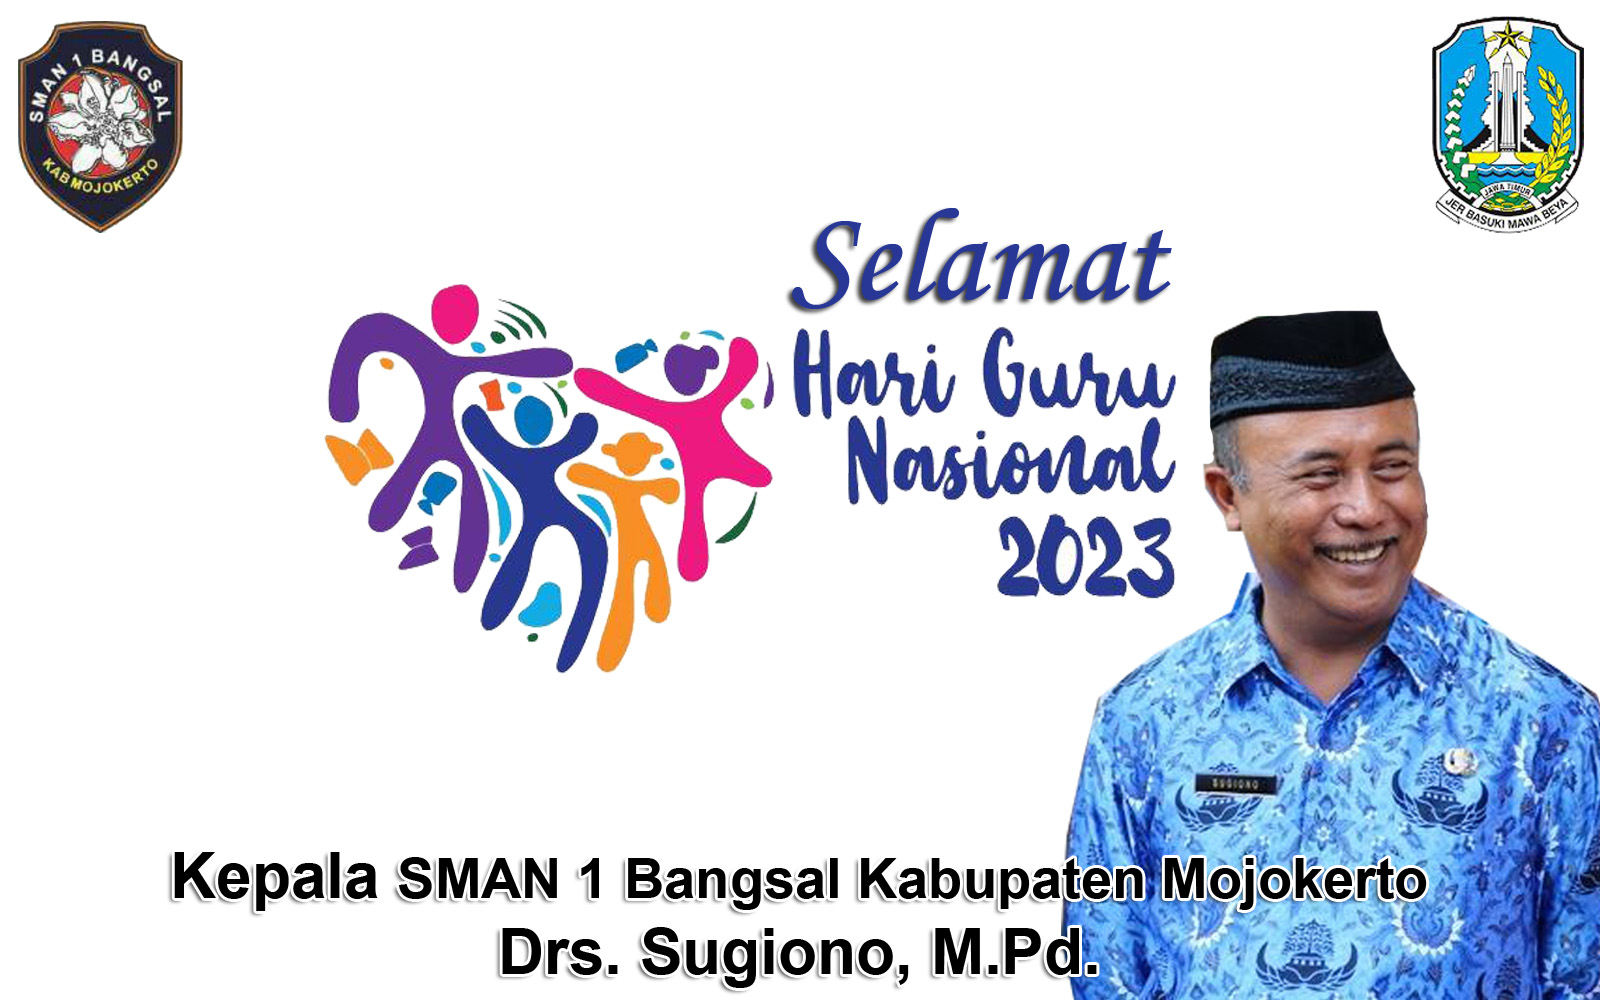 Kepala SMAN 1 Bangsal Kabupaten Mojokerto Mengucapkan Selamat Hari Guru Nasional 2023